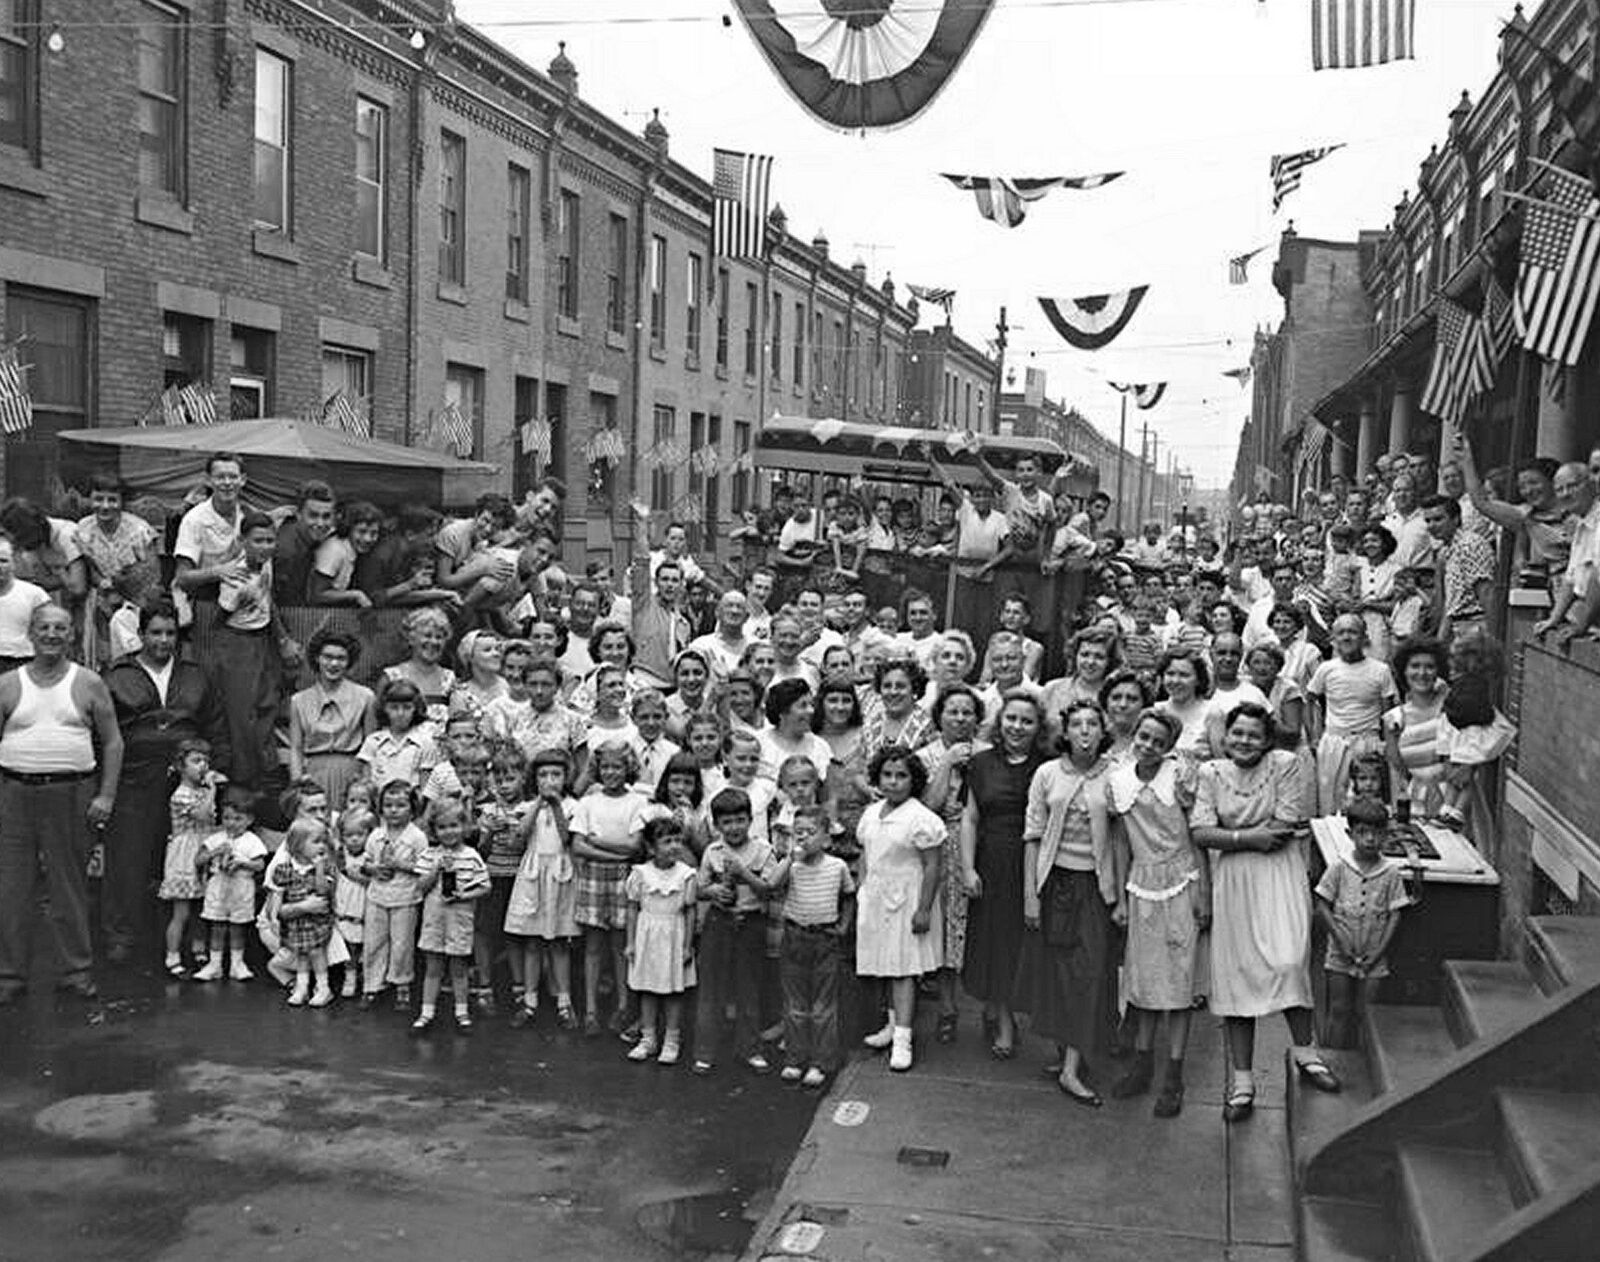 1950s SOUTH PHILADELPHIA STREET FAIR Photo  (196-O)